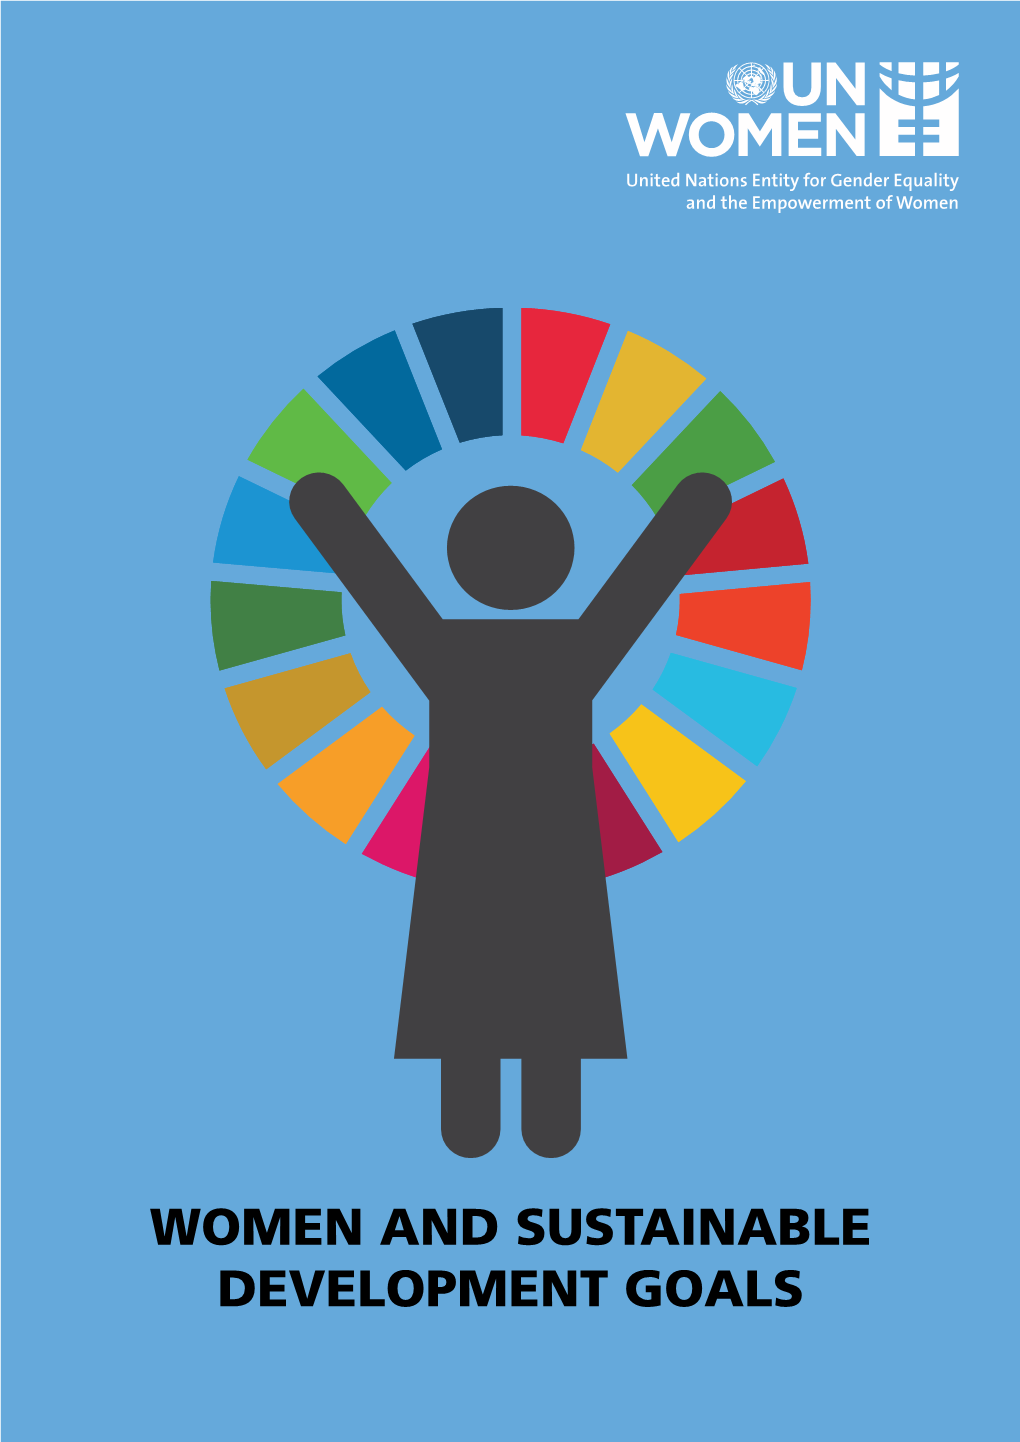 UN Women on Women and Sustainable Development Goals (Sdgs)